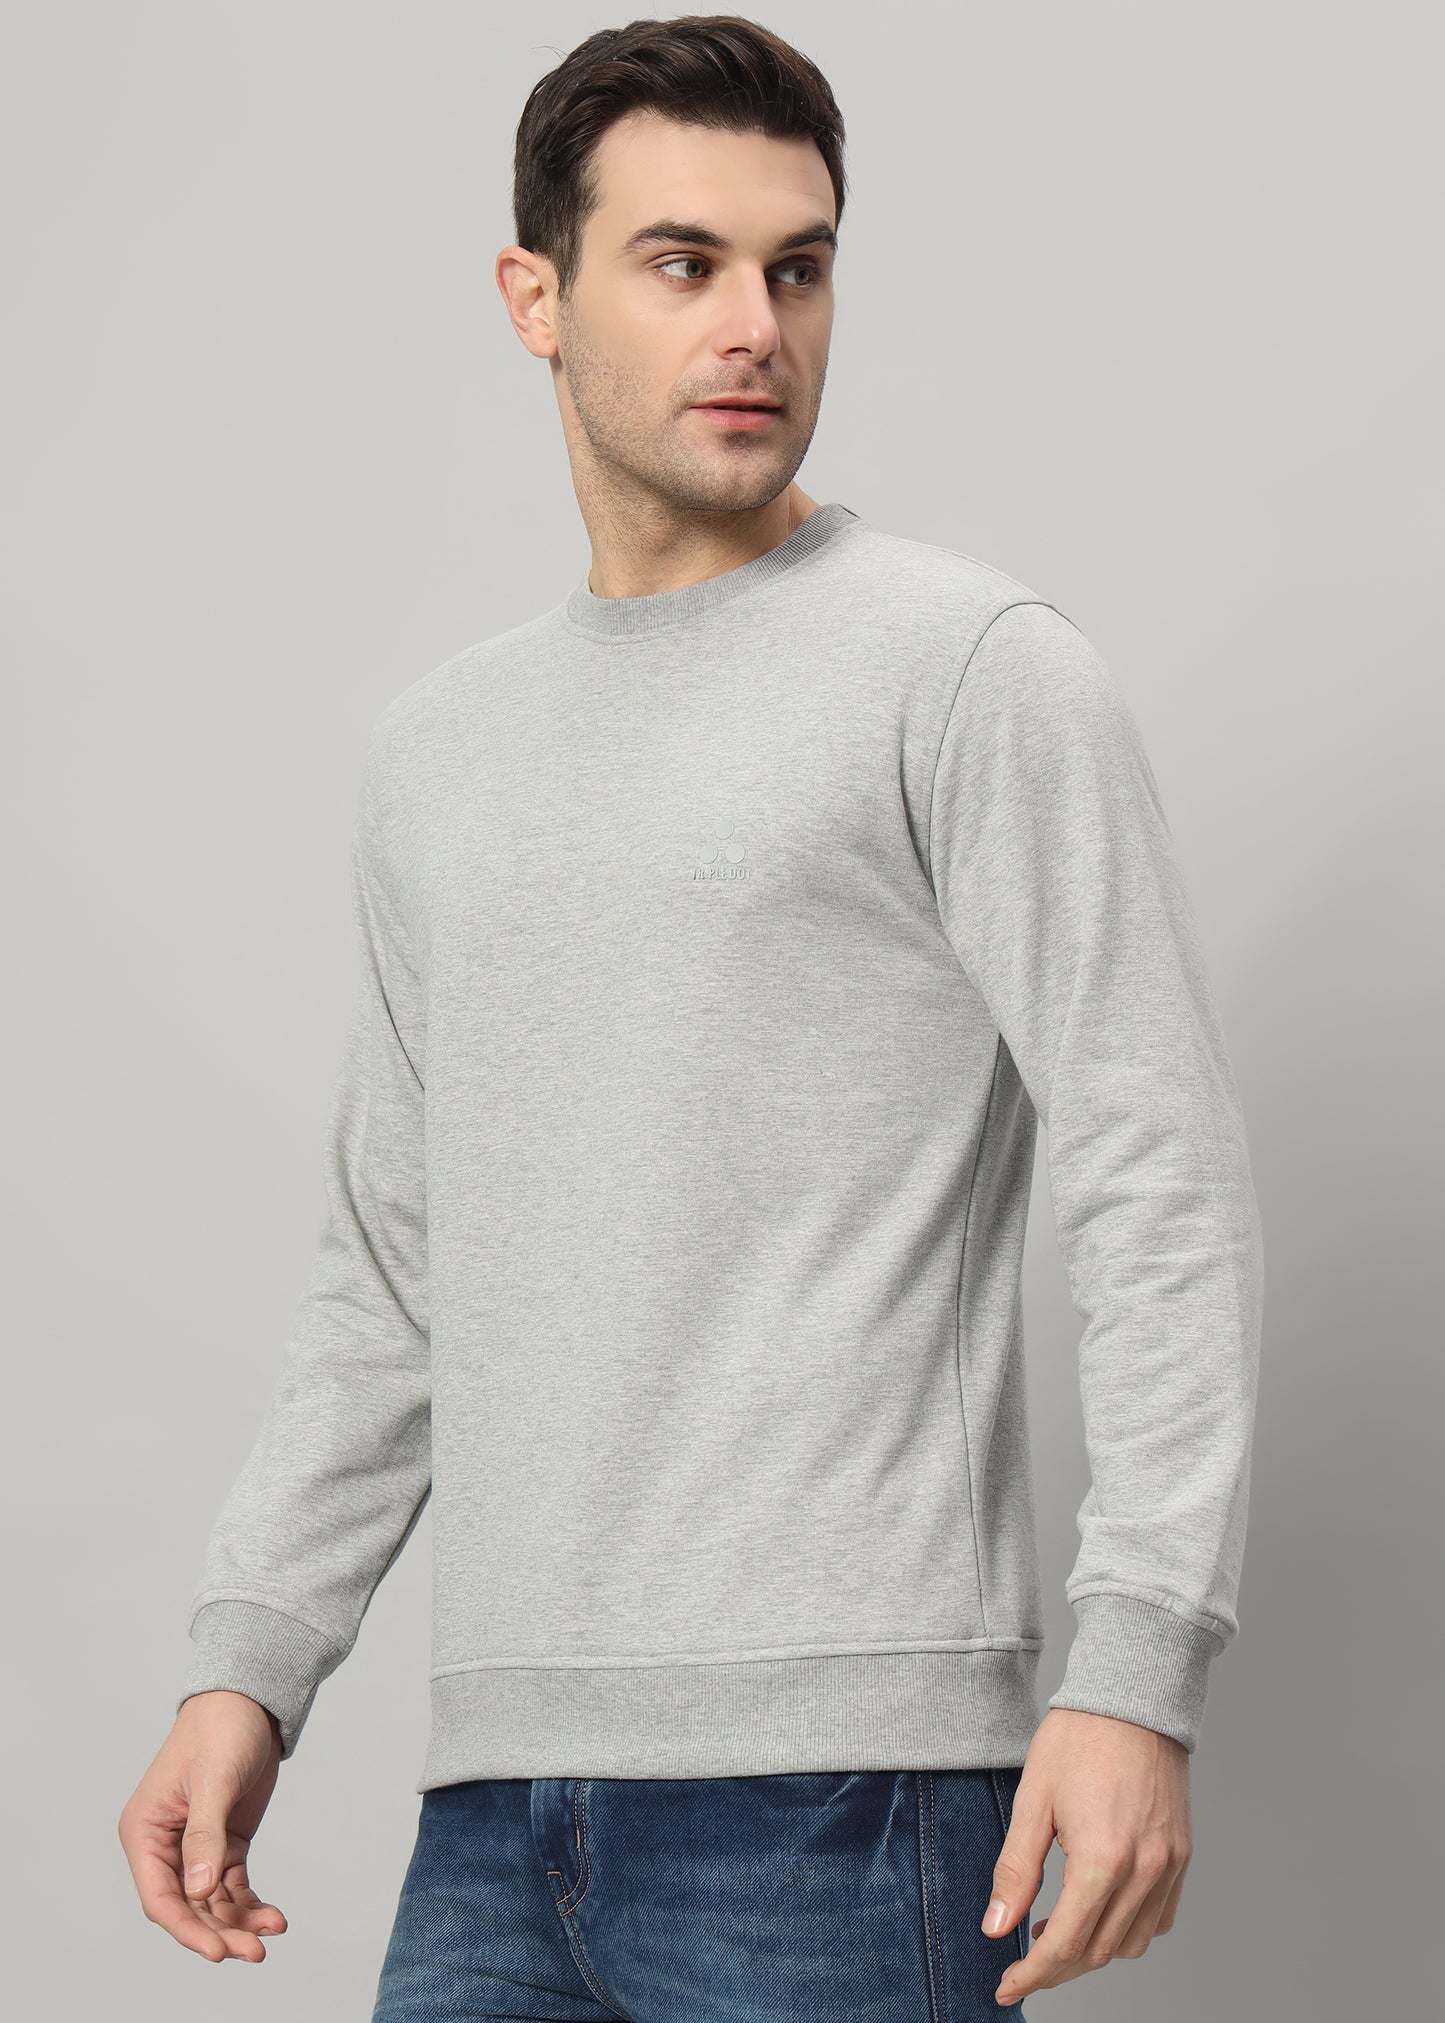 Cotton Grey Fleece Crew Neck Sweat Shirt